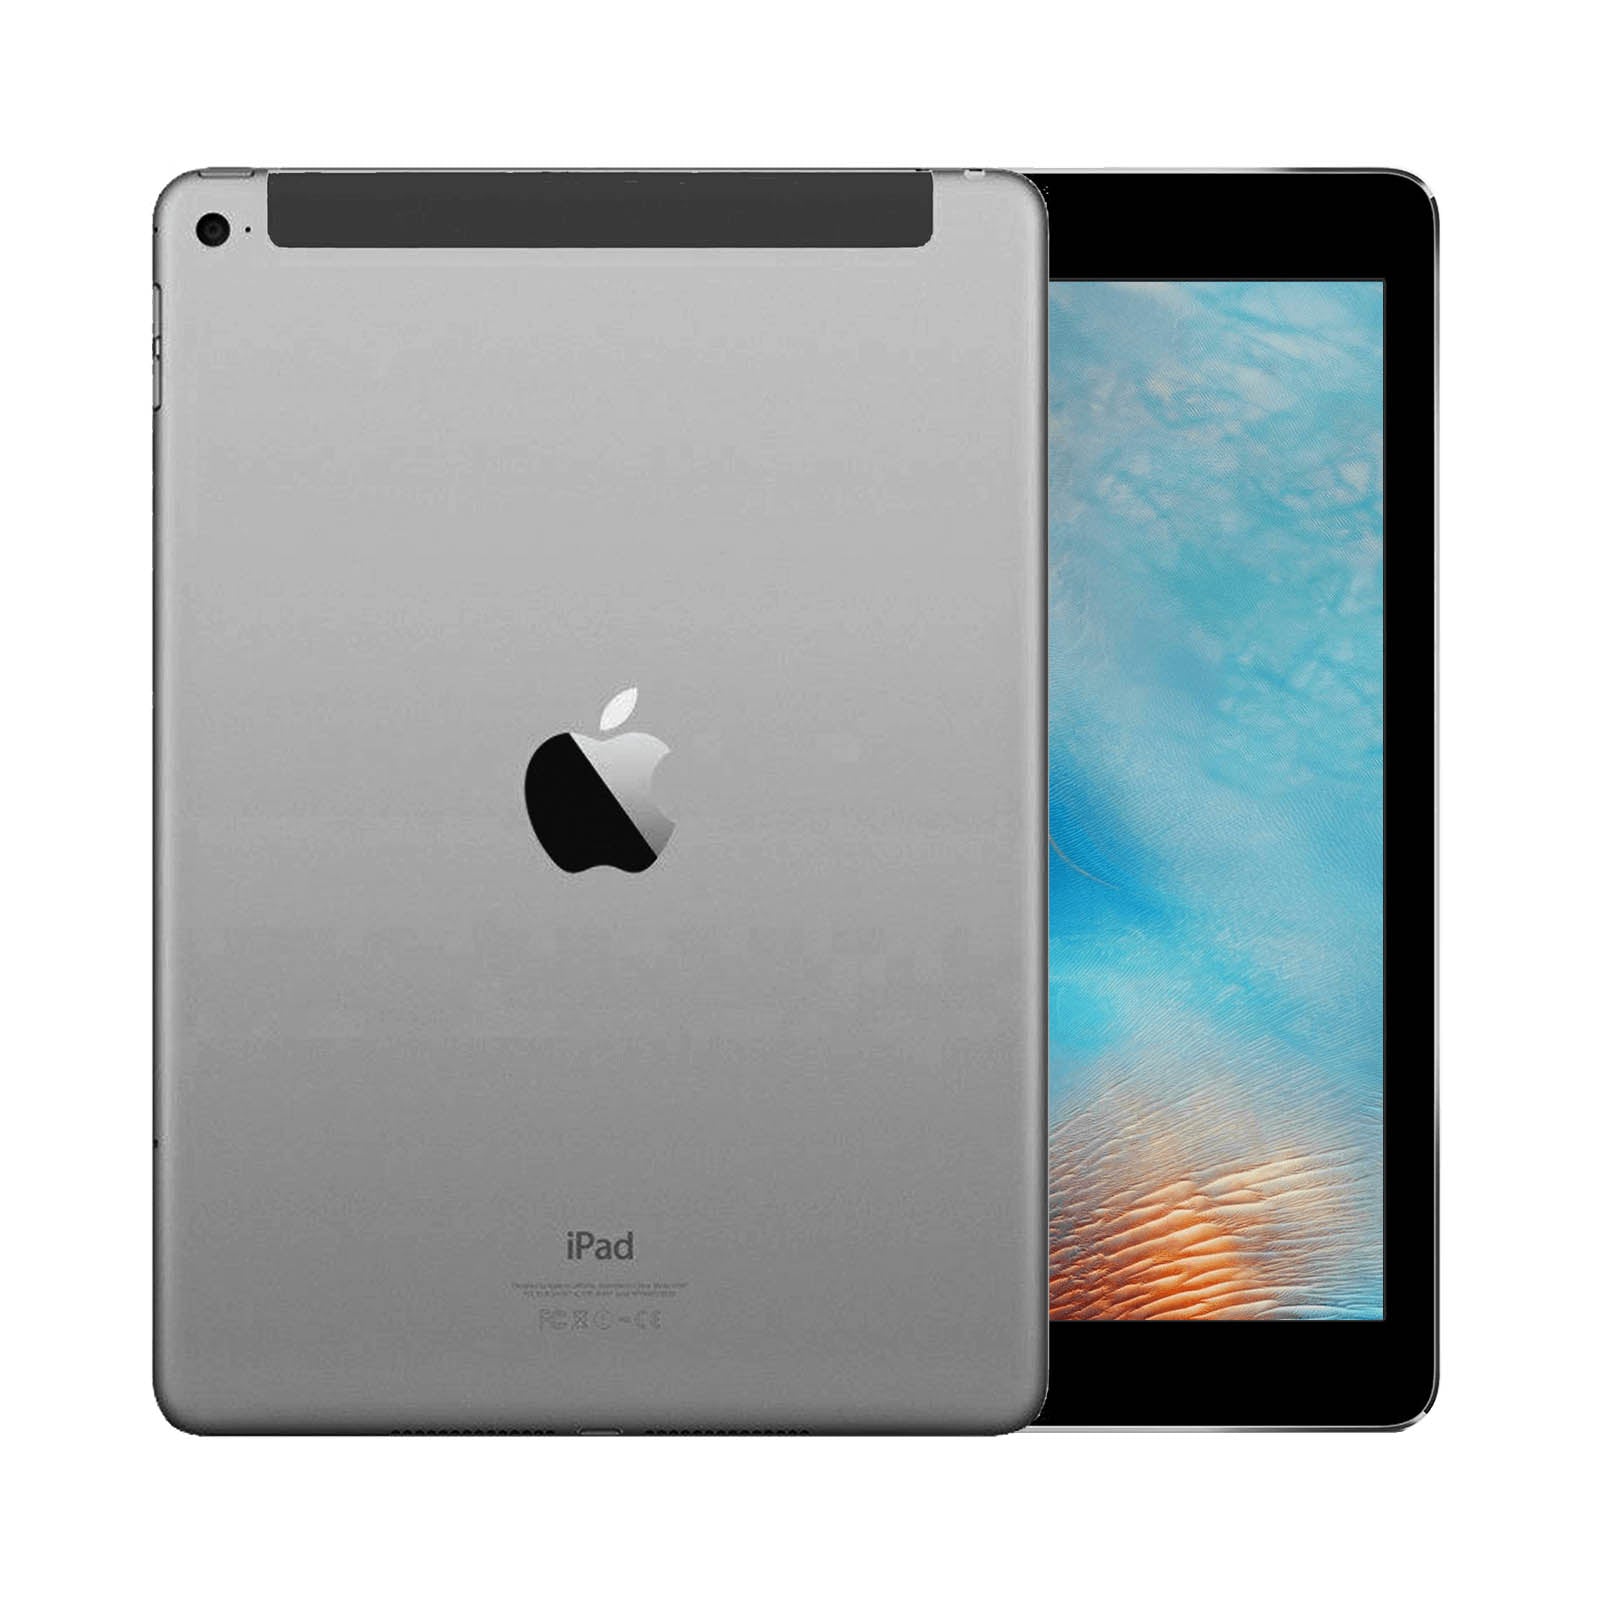 Apple iPad Air 2 16GB Space Grey Very Good Cellular - Unlocked